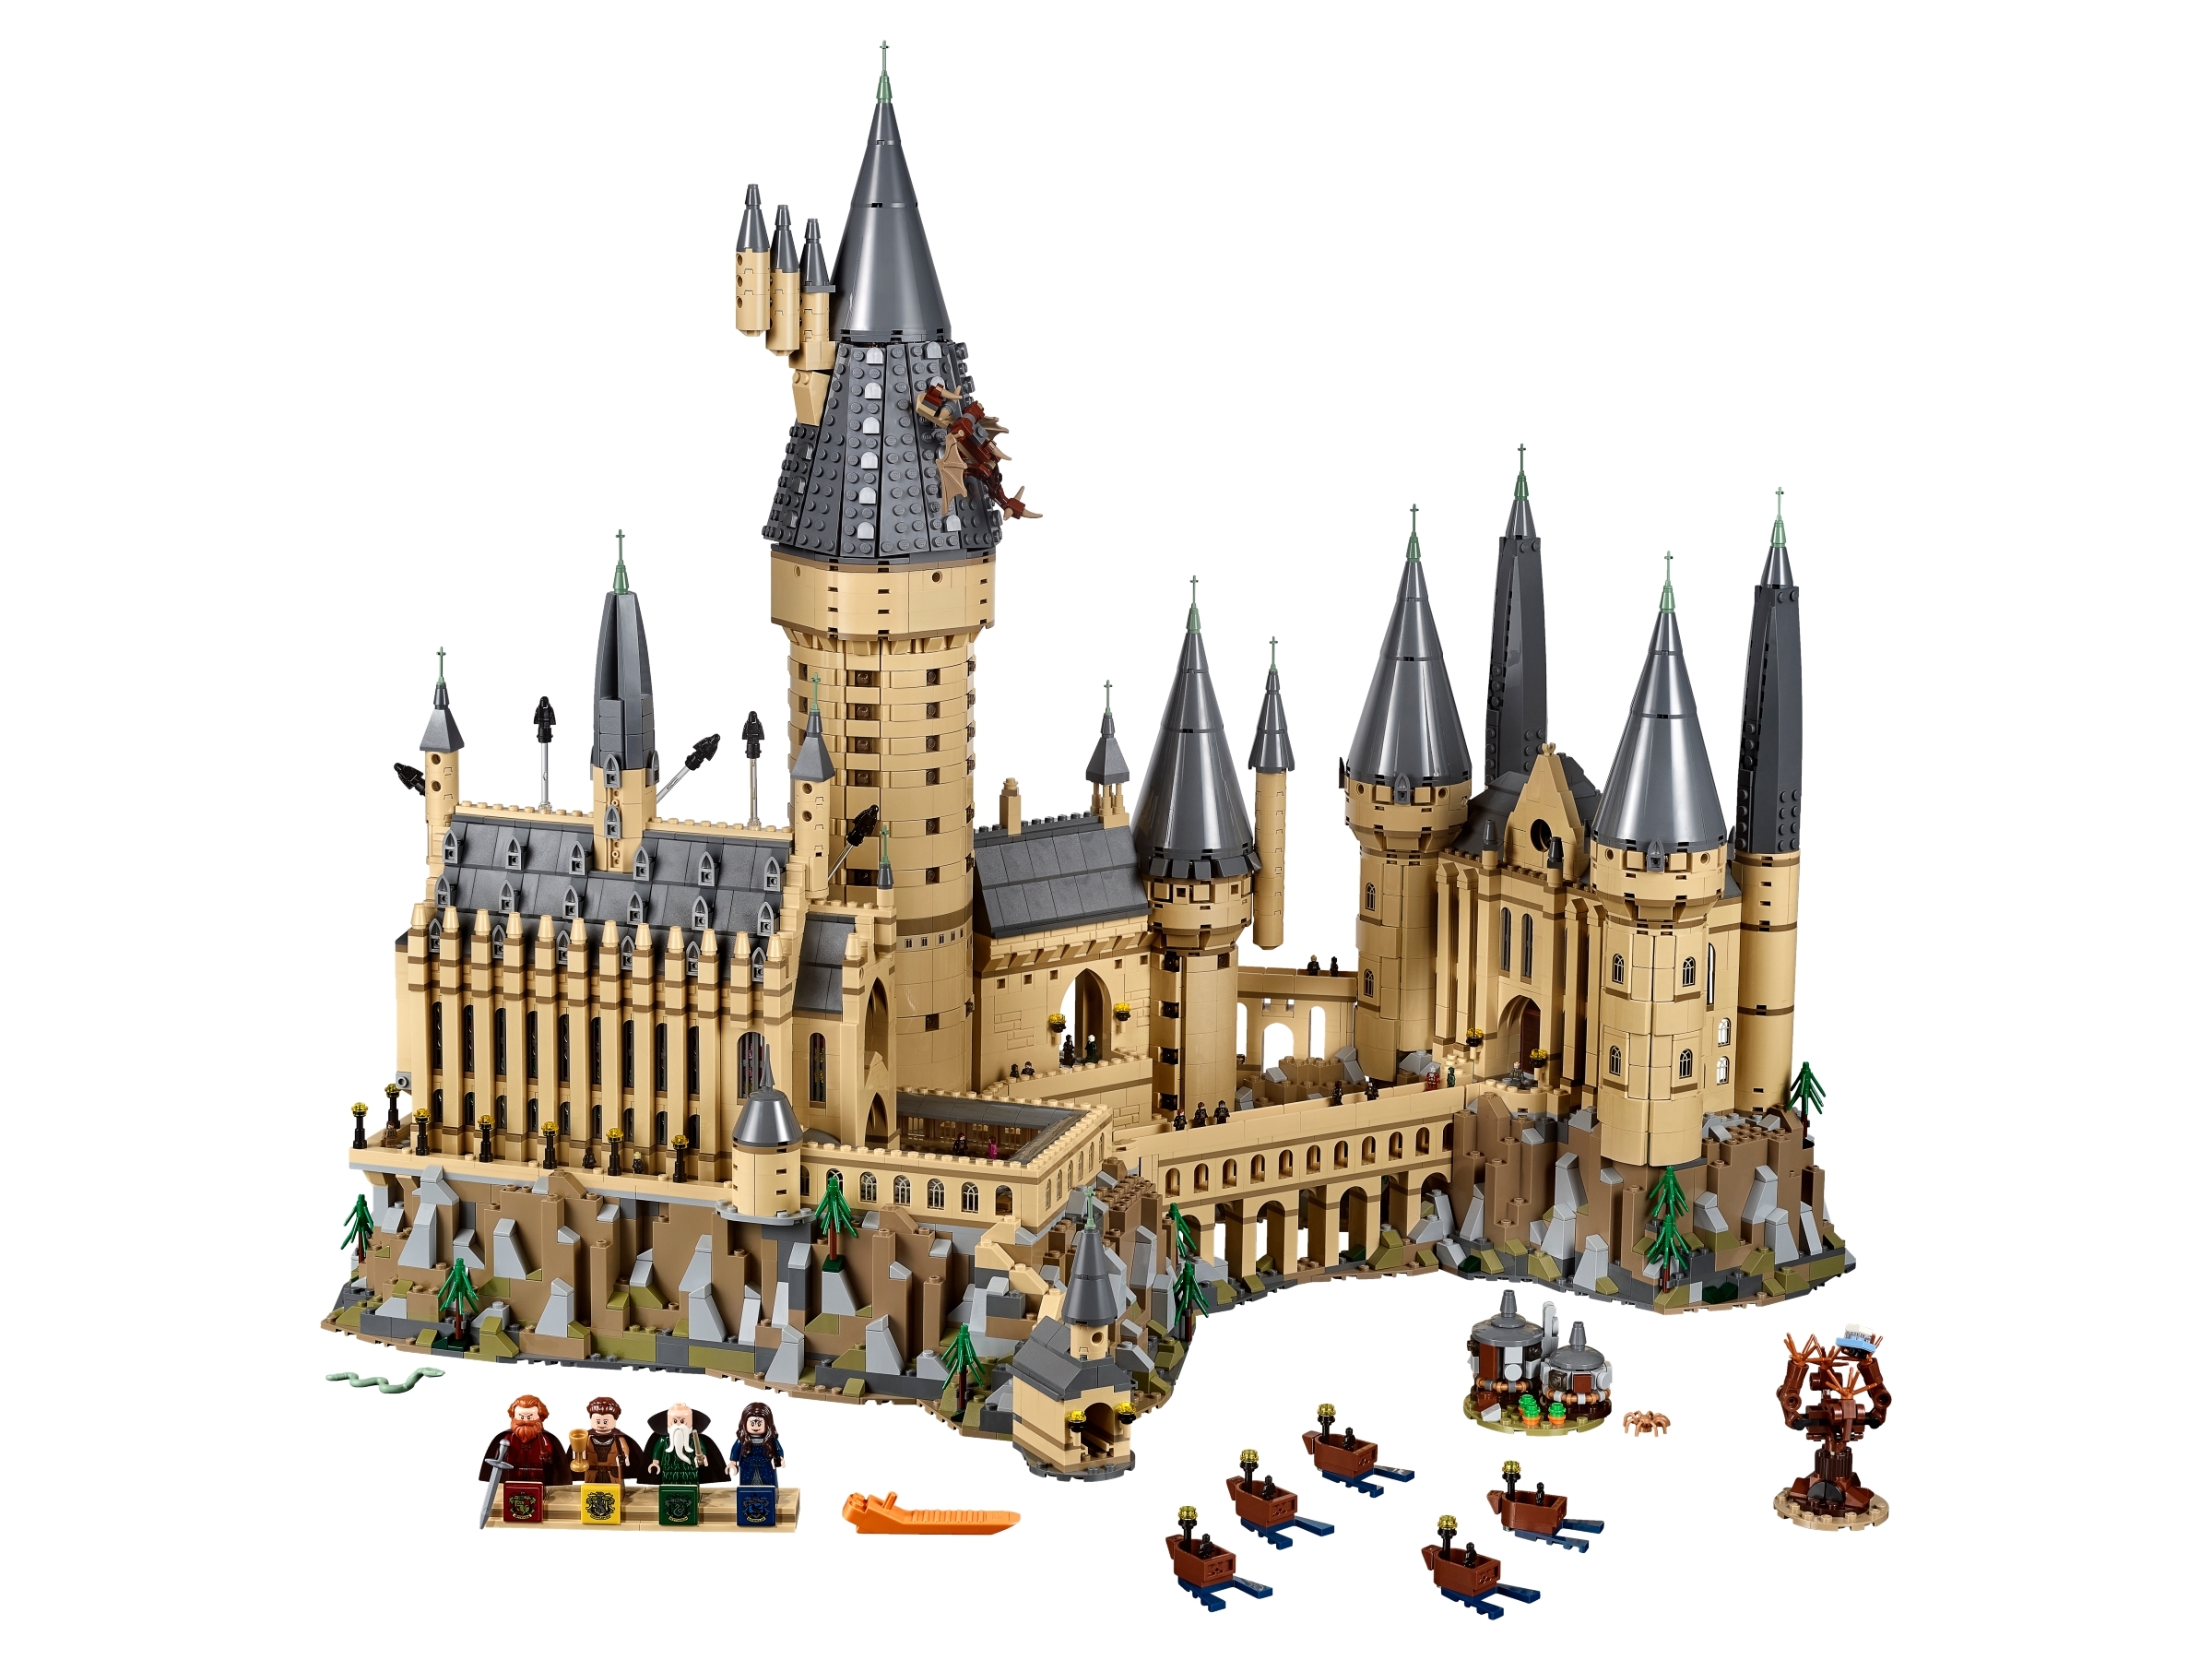 Lego Harry Potter Hogwarts Castillo Set 71043 Modelo Kit de construcción 6742 piezas 